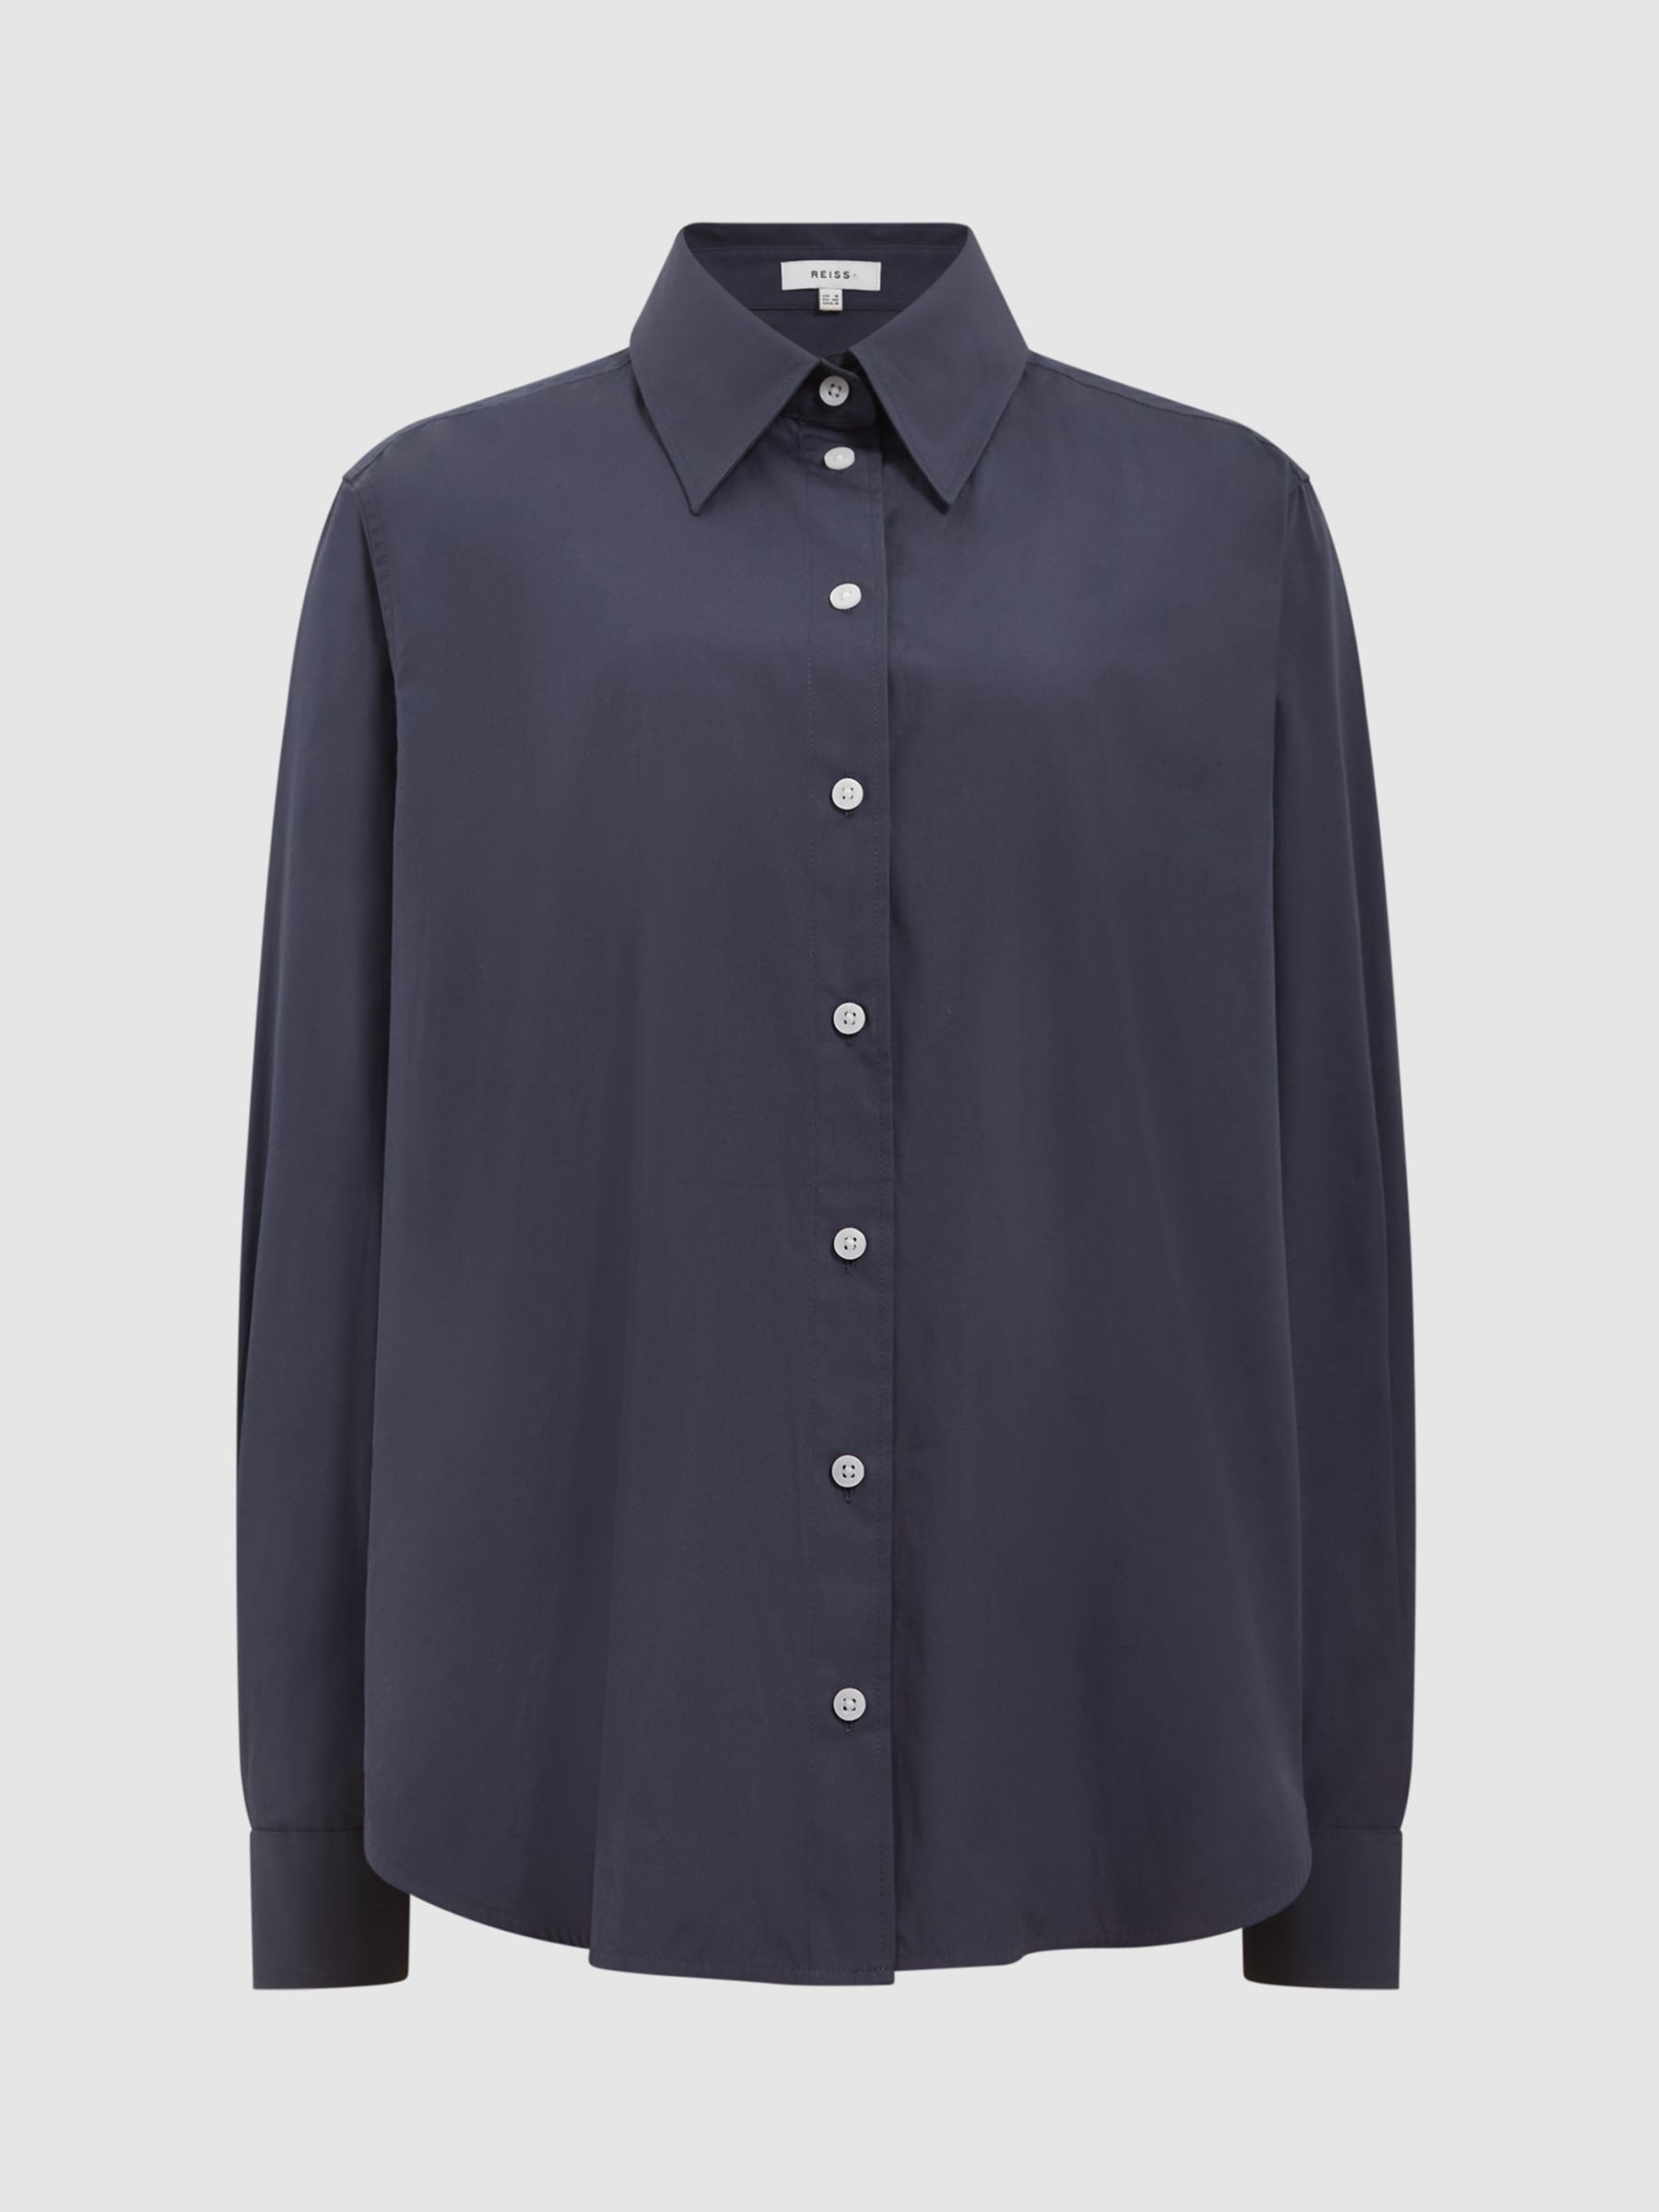 Reiss Jenny Cotton Shirt, Navy at John Lewis & Partners